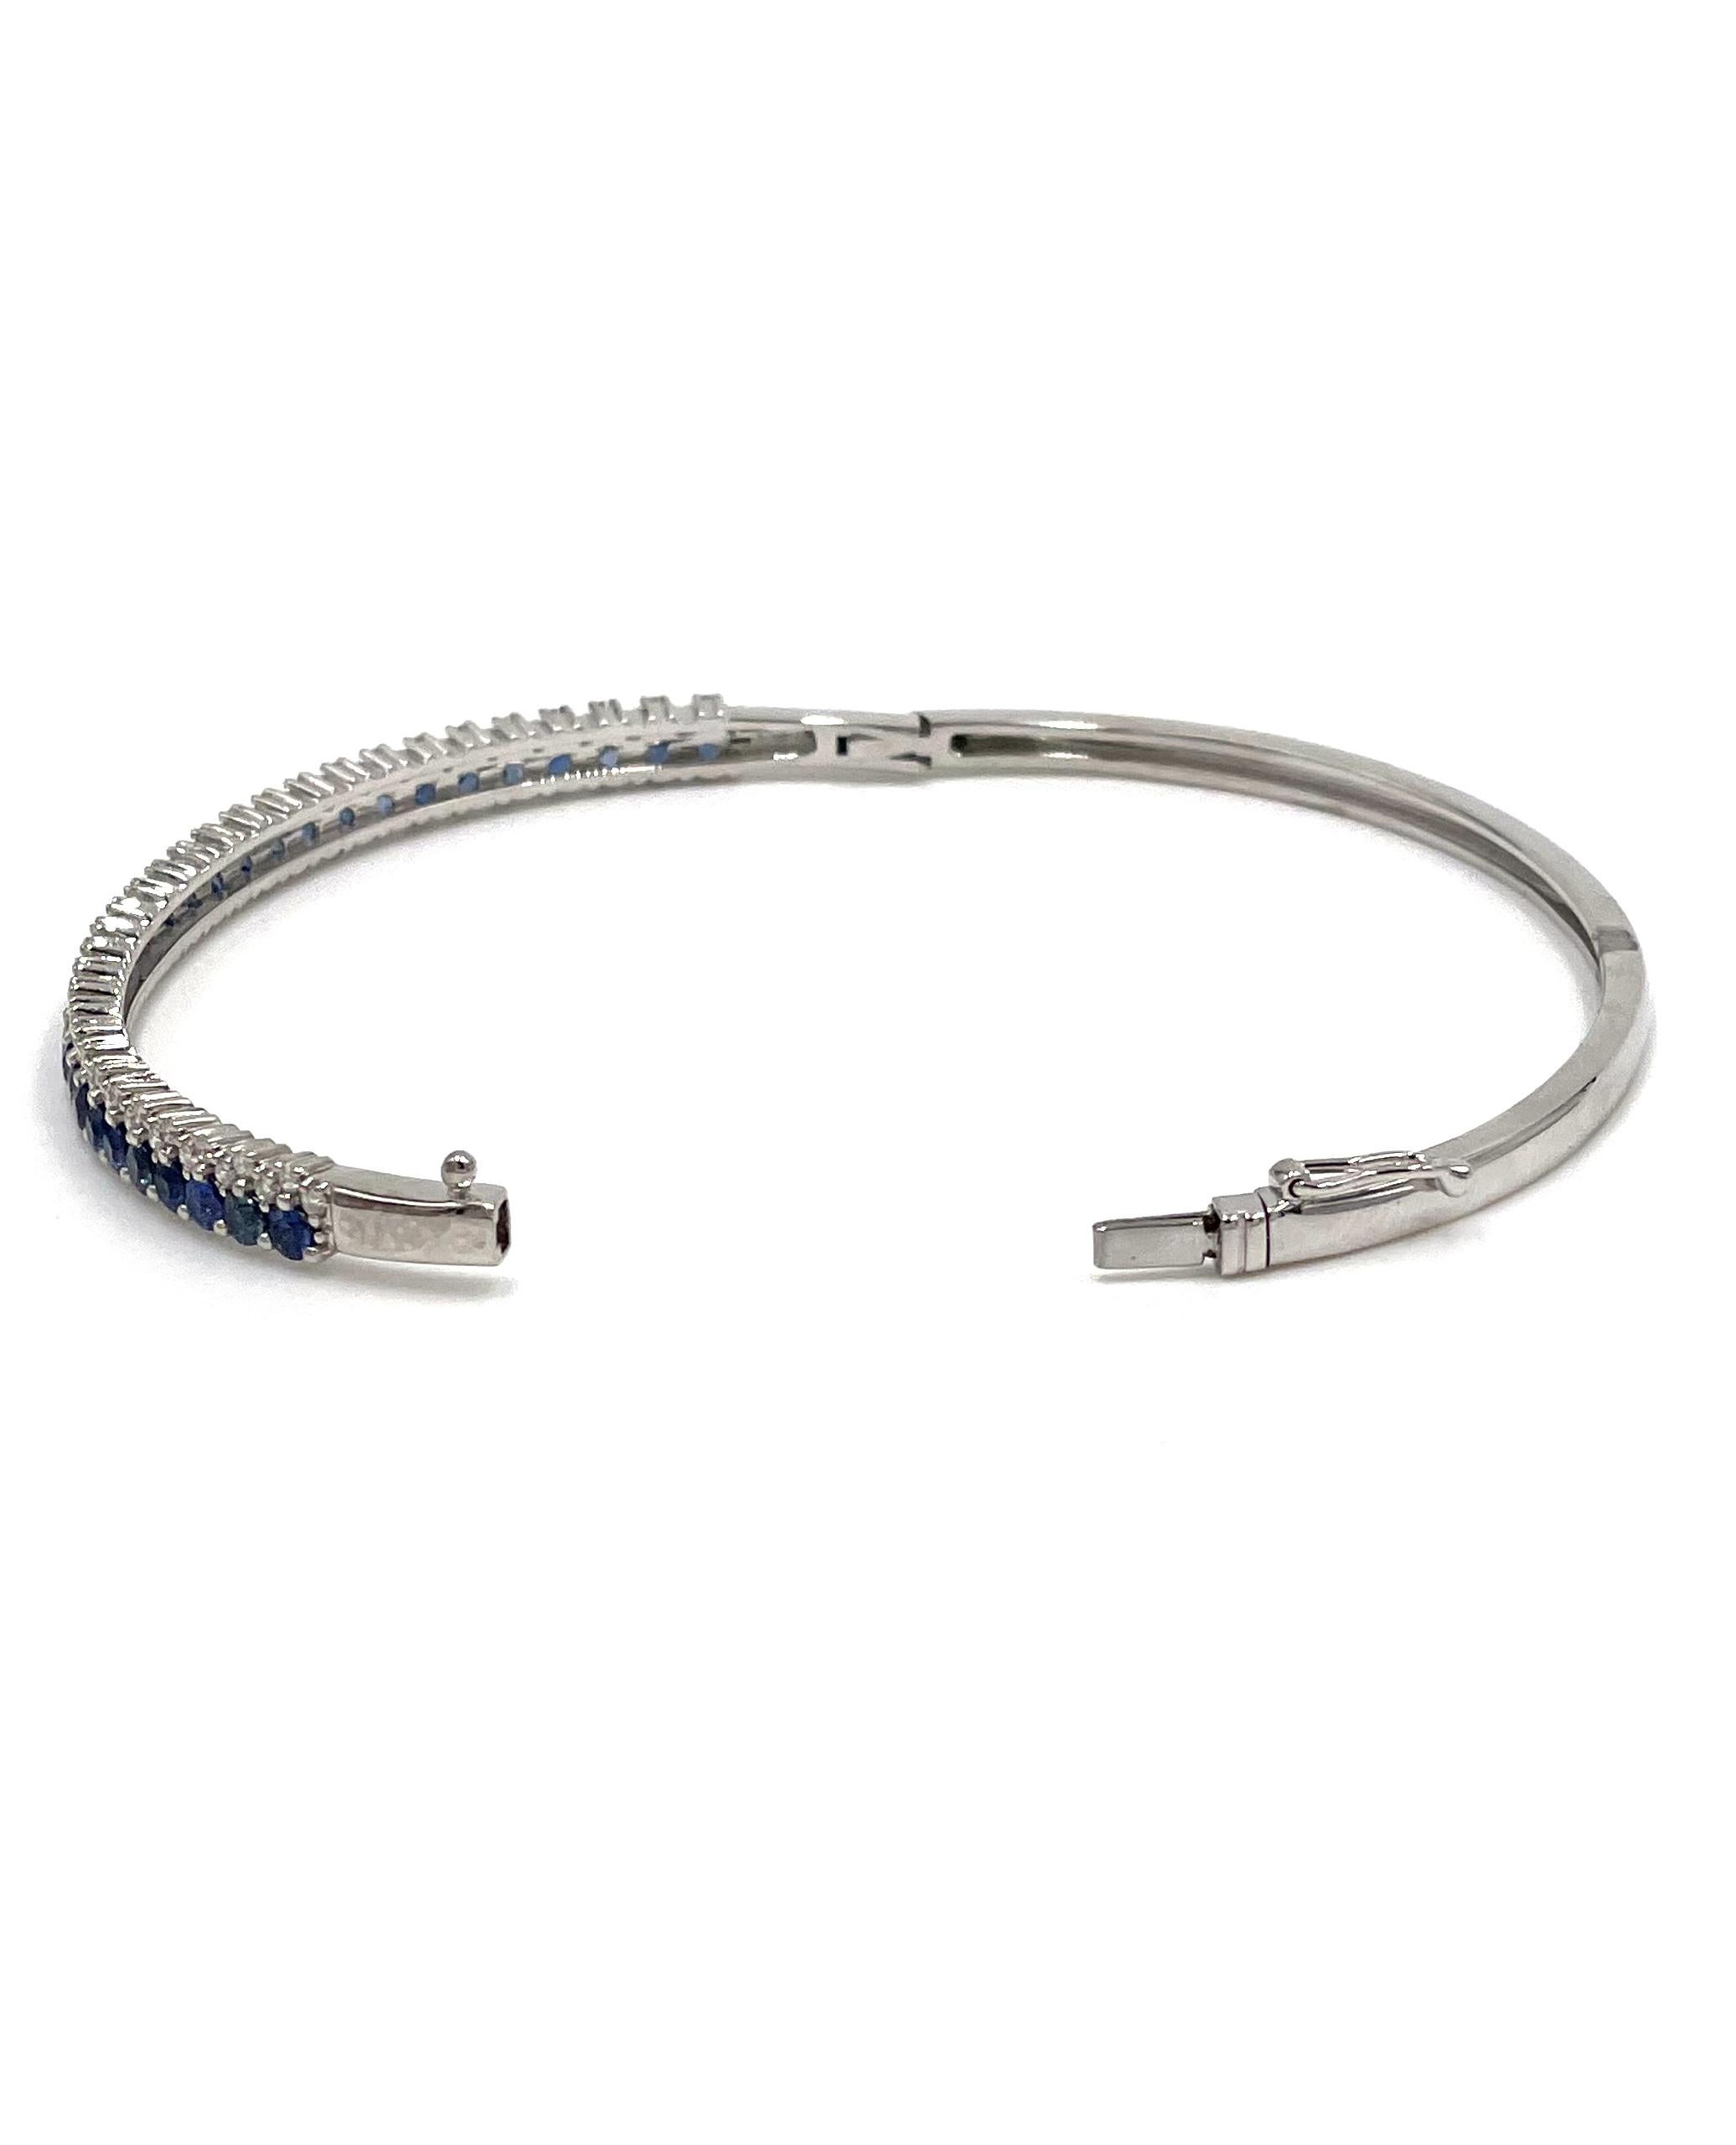 Contemporary 14K White Gold Diamond and Sapphire Double Row Bangle Bracelet